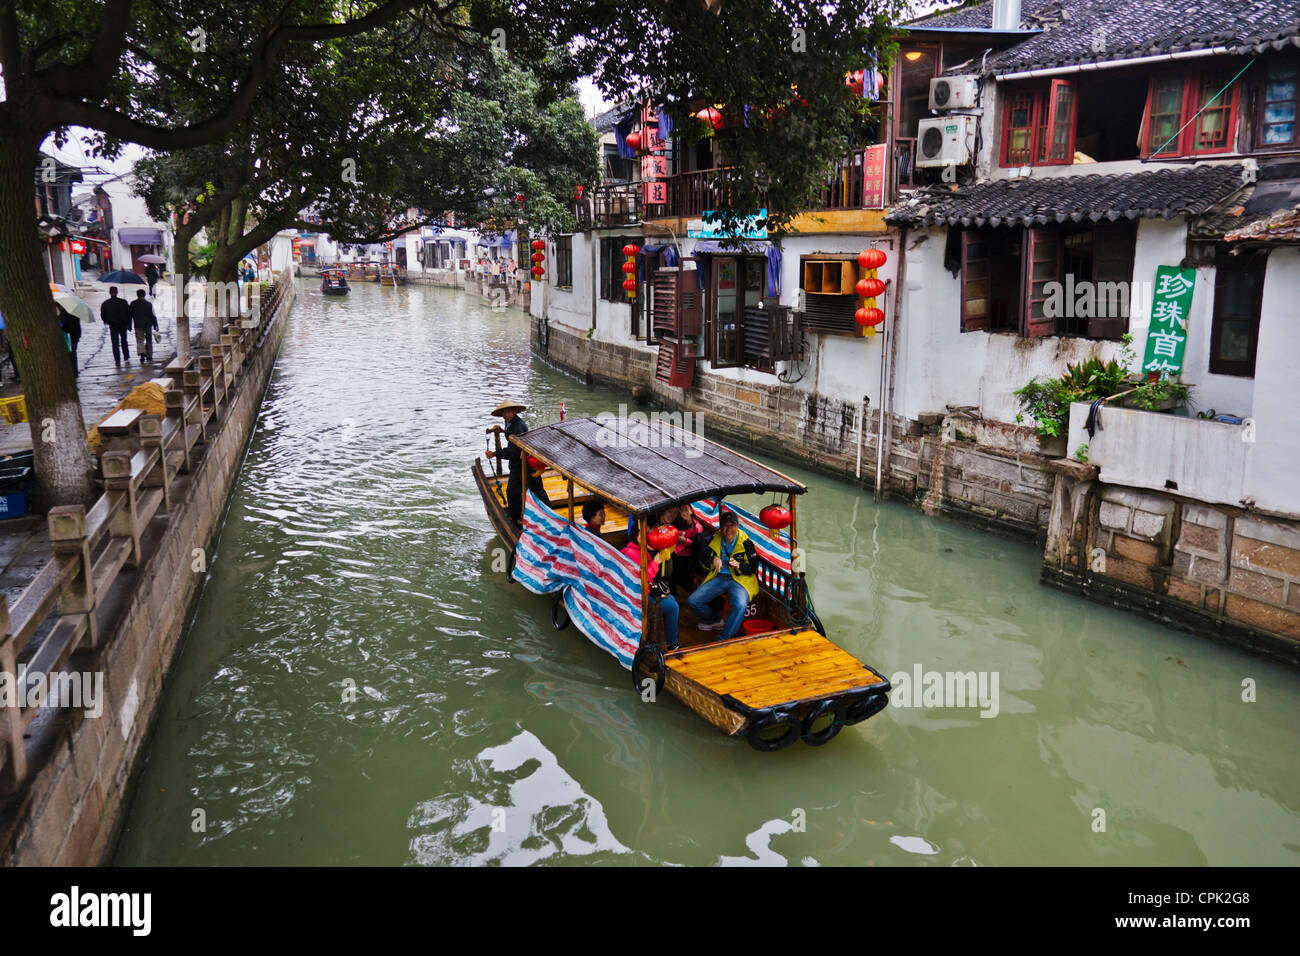 Case tradizionali e barca sul Canal Grande, Zhujiajiao, nei pressi di Shanghai, Cina Foto Stock